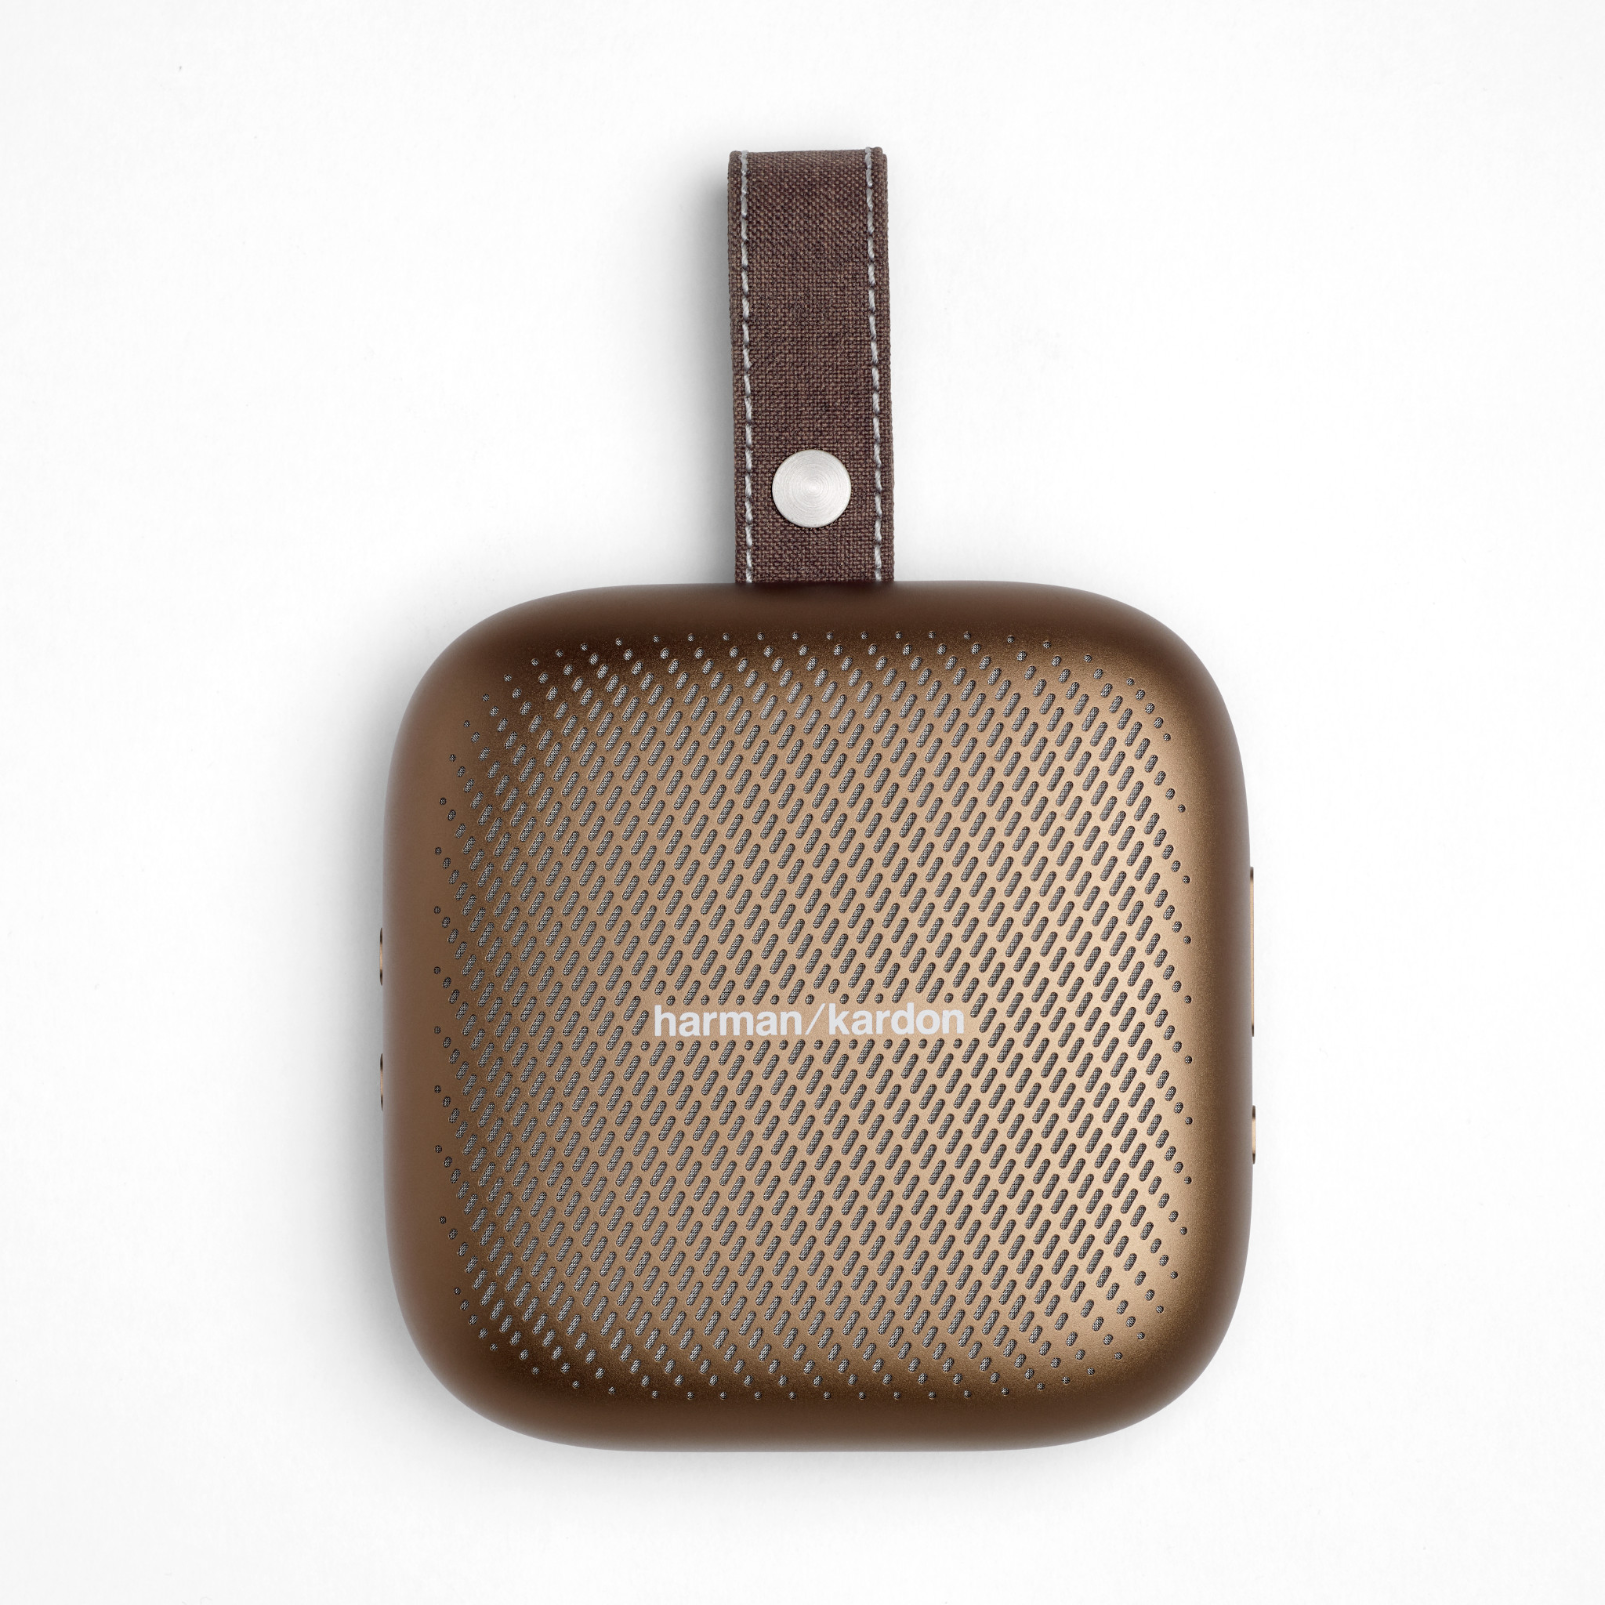 Harman Kardon Neo - Copper - Portable Bluetooth speaker - Detailshot 3